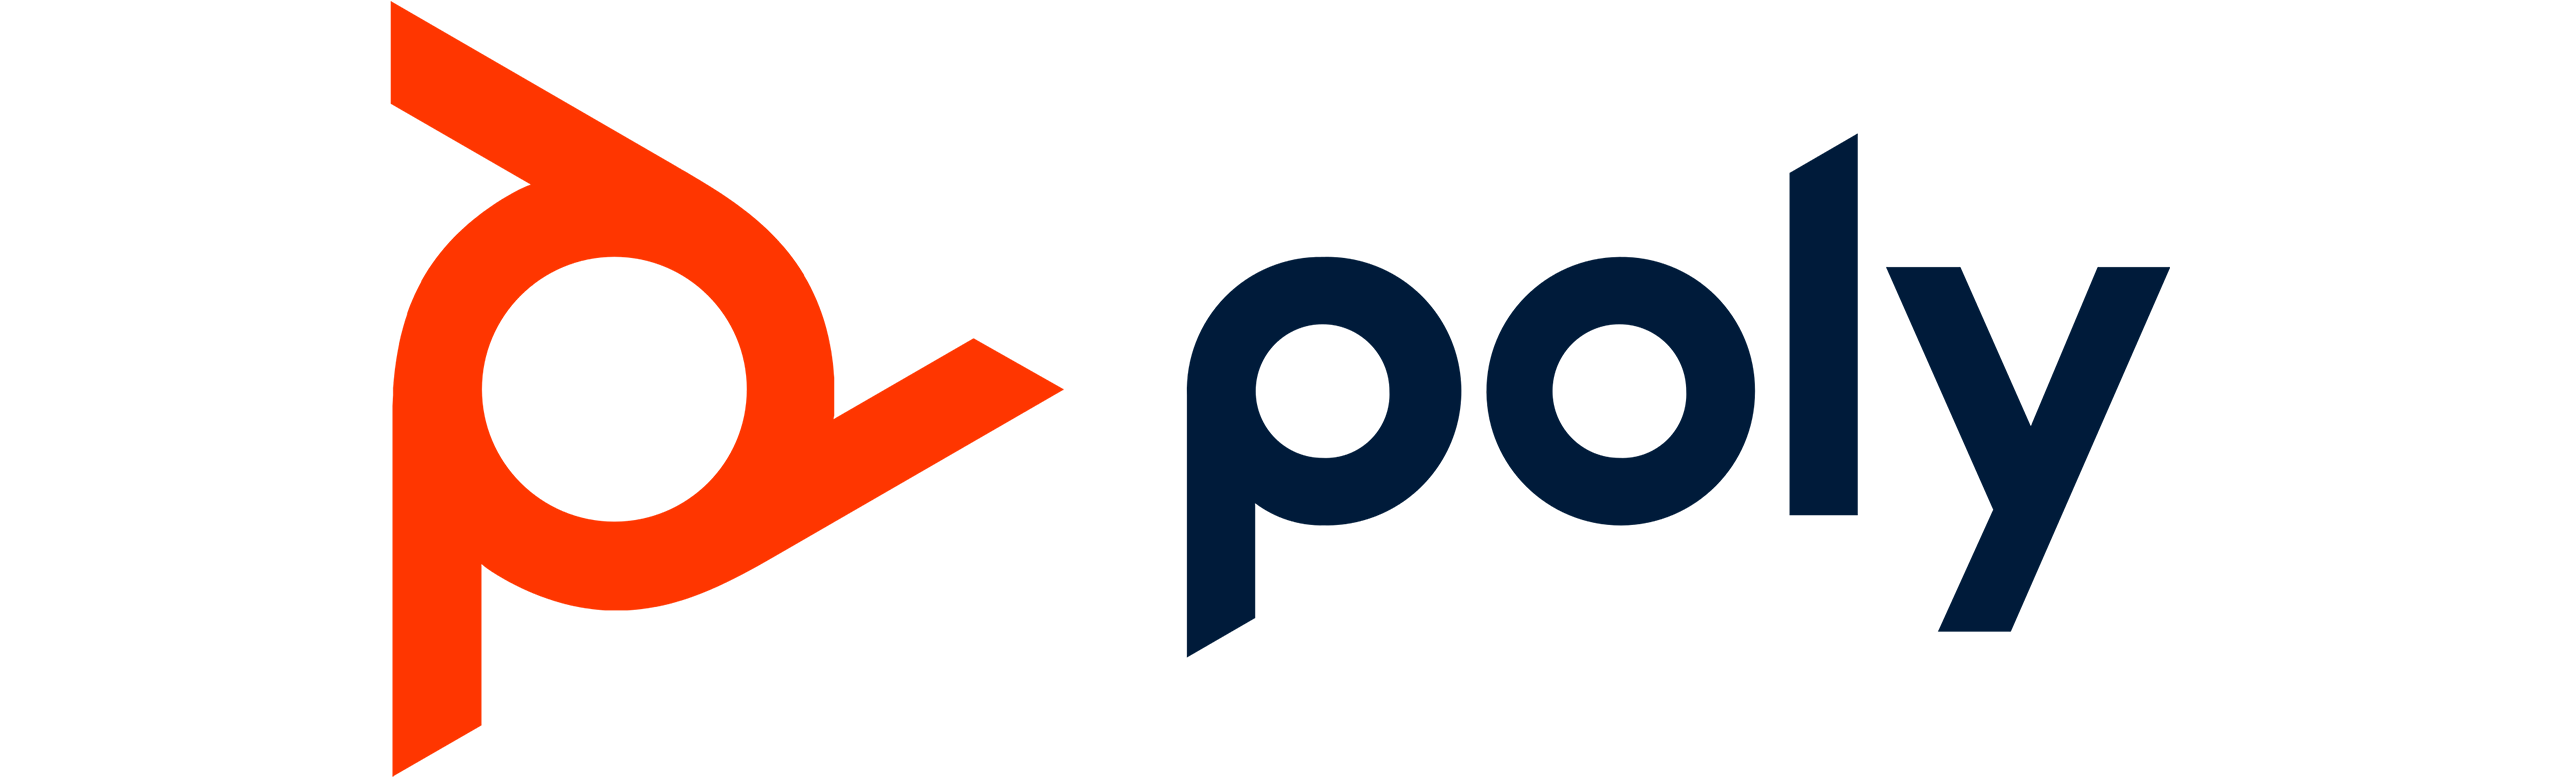 Poly-1